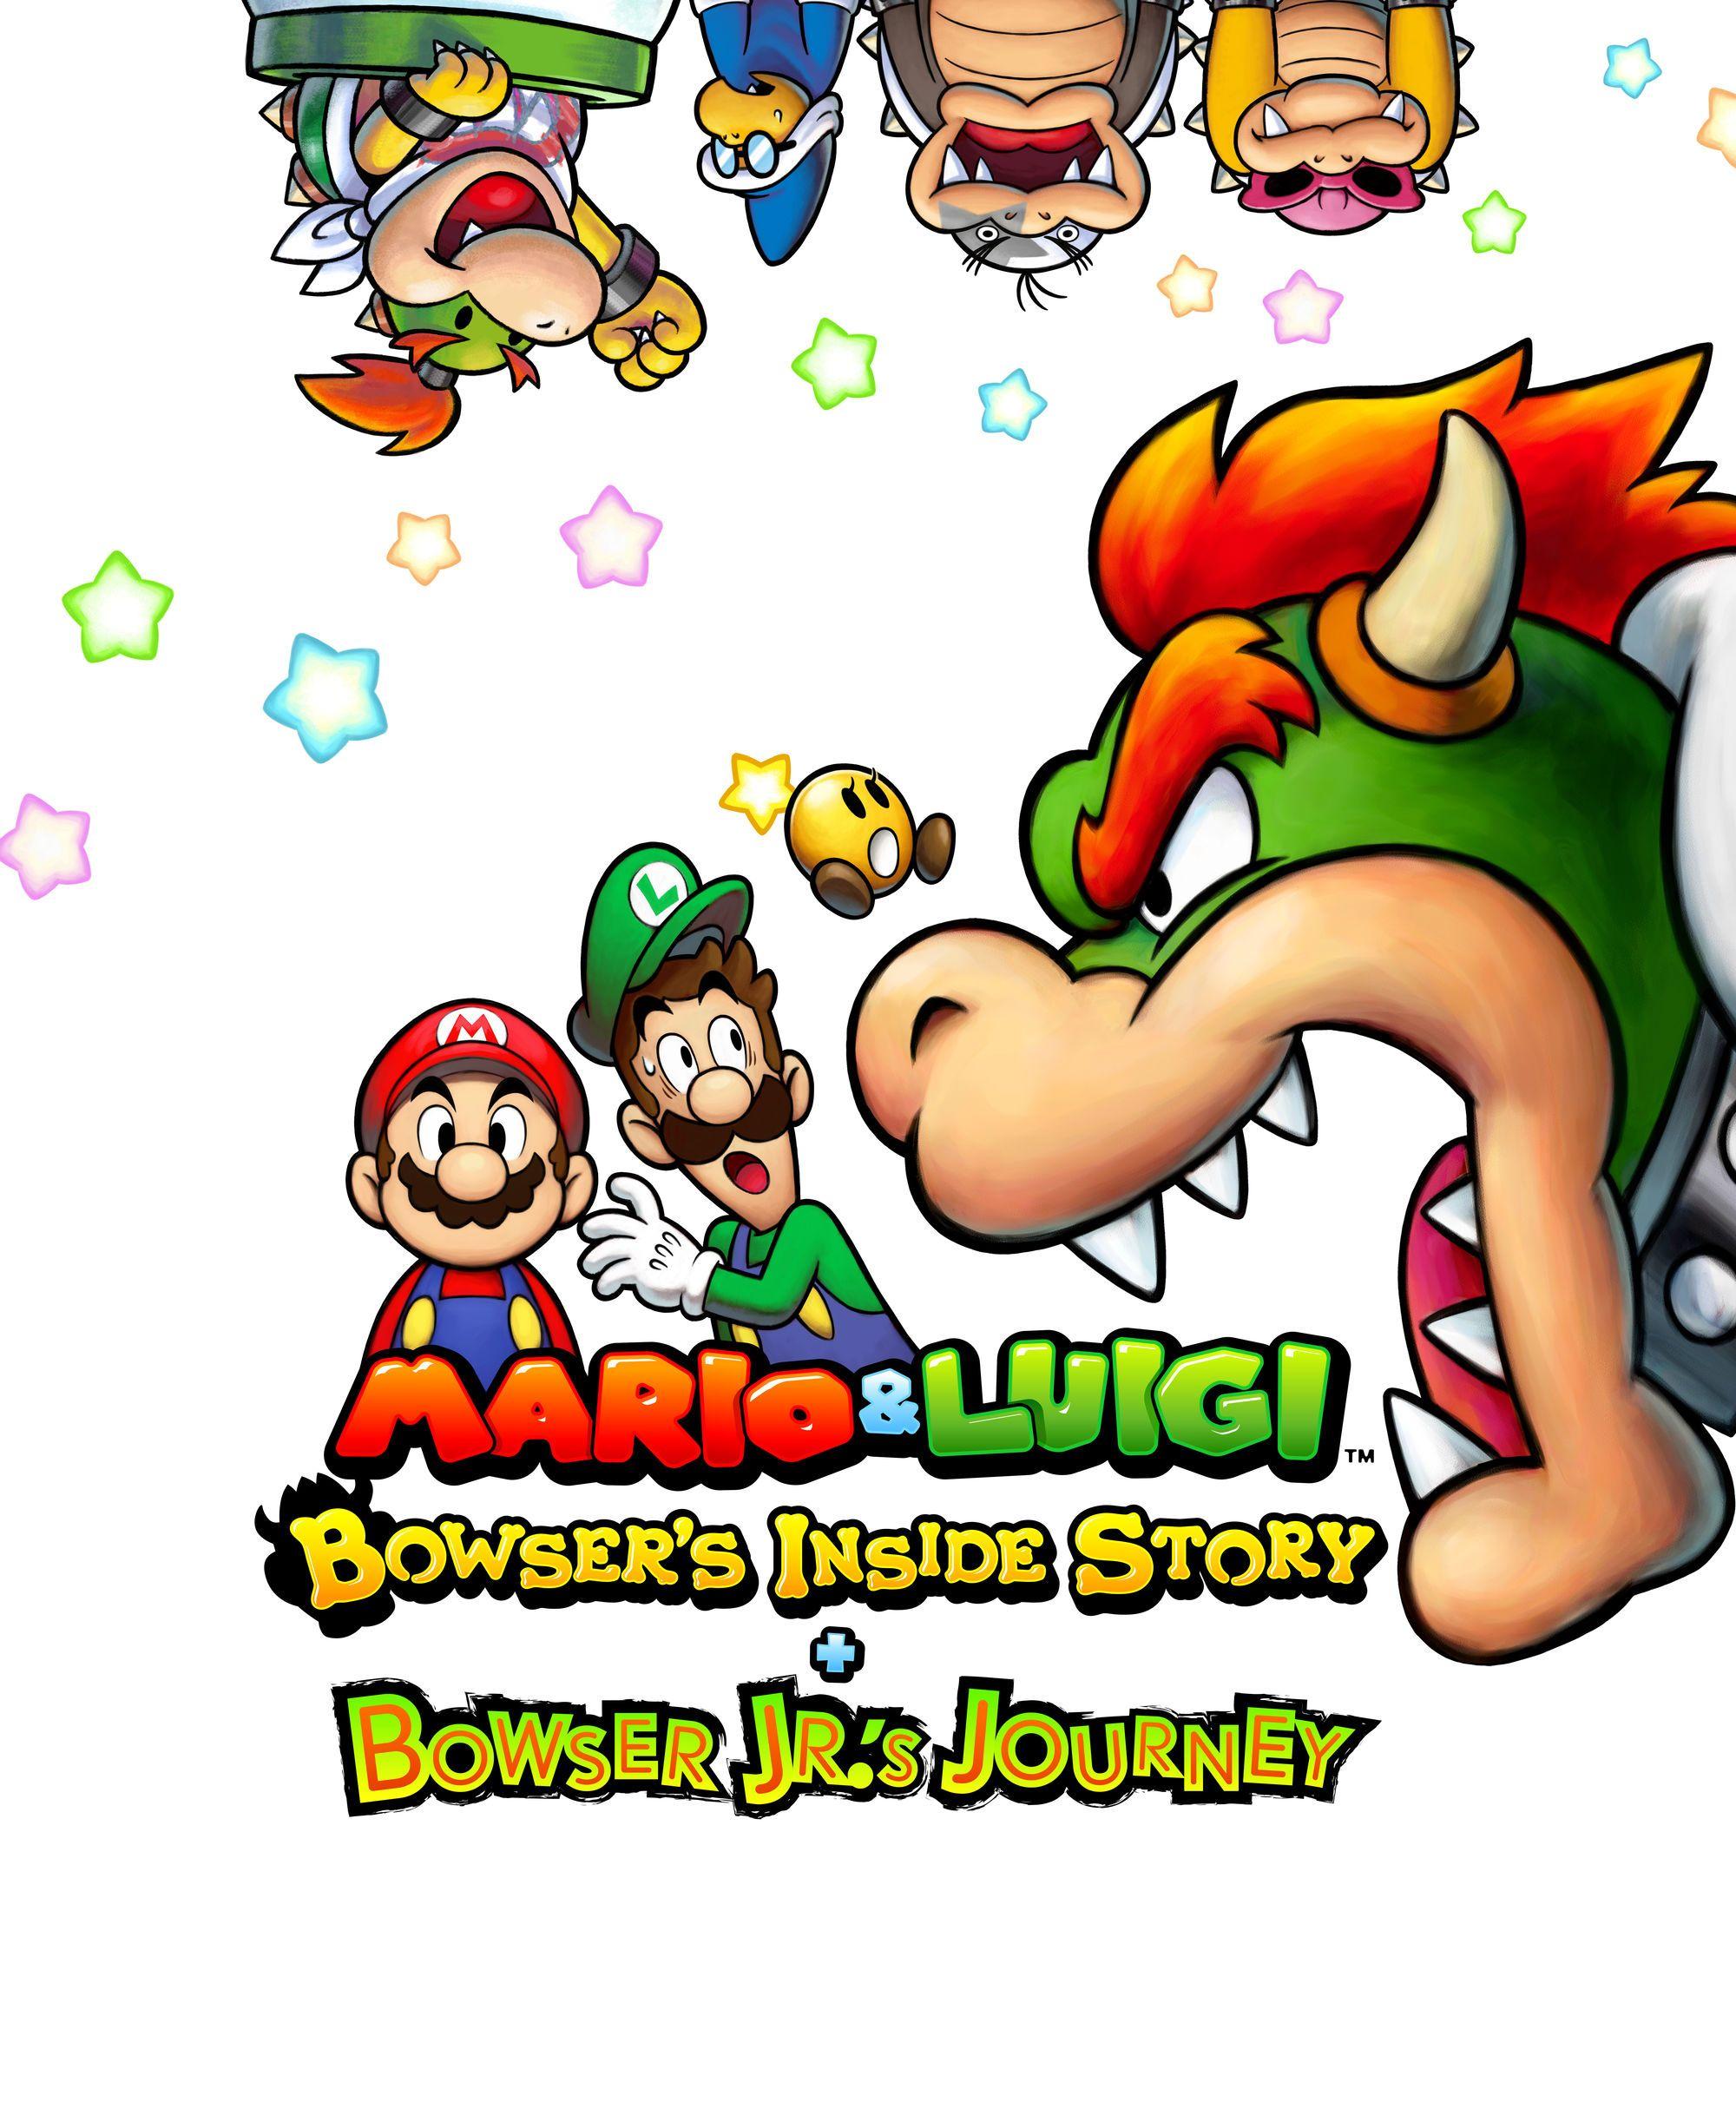 Mario luigi bowser. Луиджи и Боузер. Марио и Луиджи Боузер инсайд стори. Luigi Mario and Luigi Bowser's inside story.